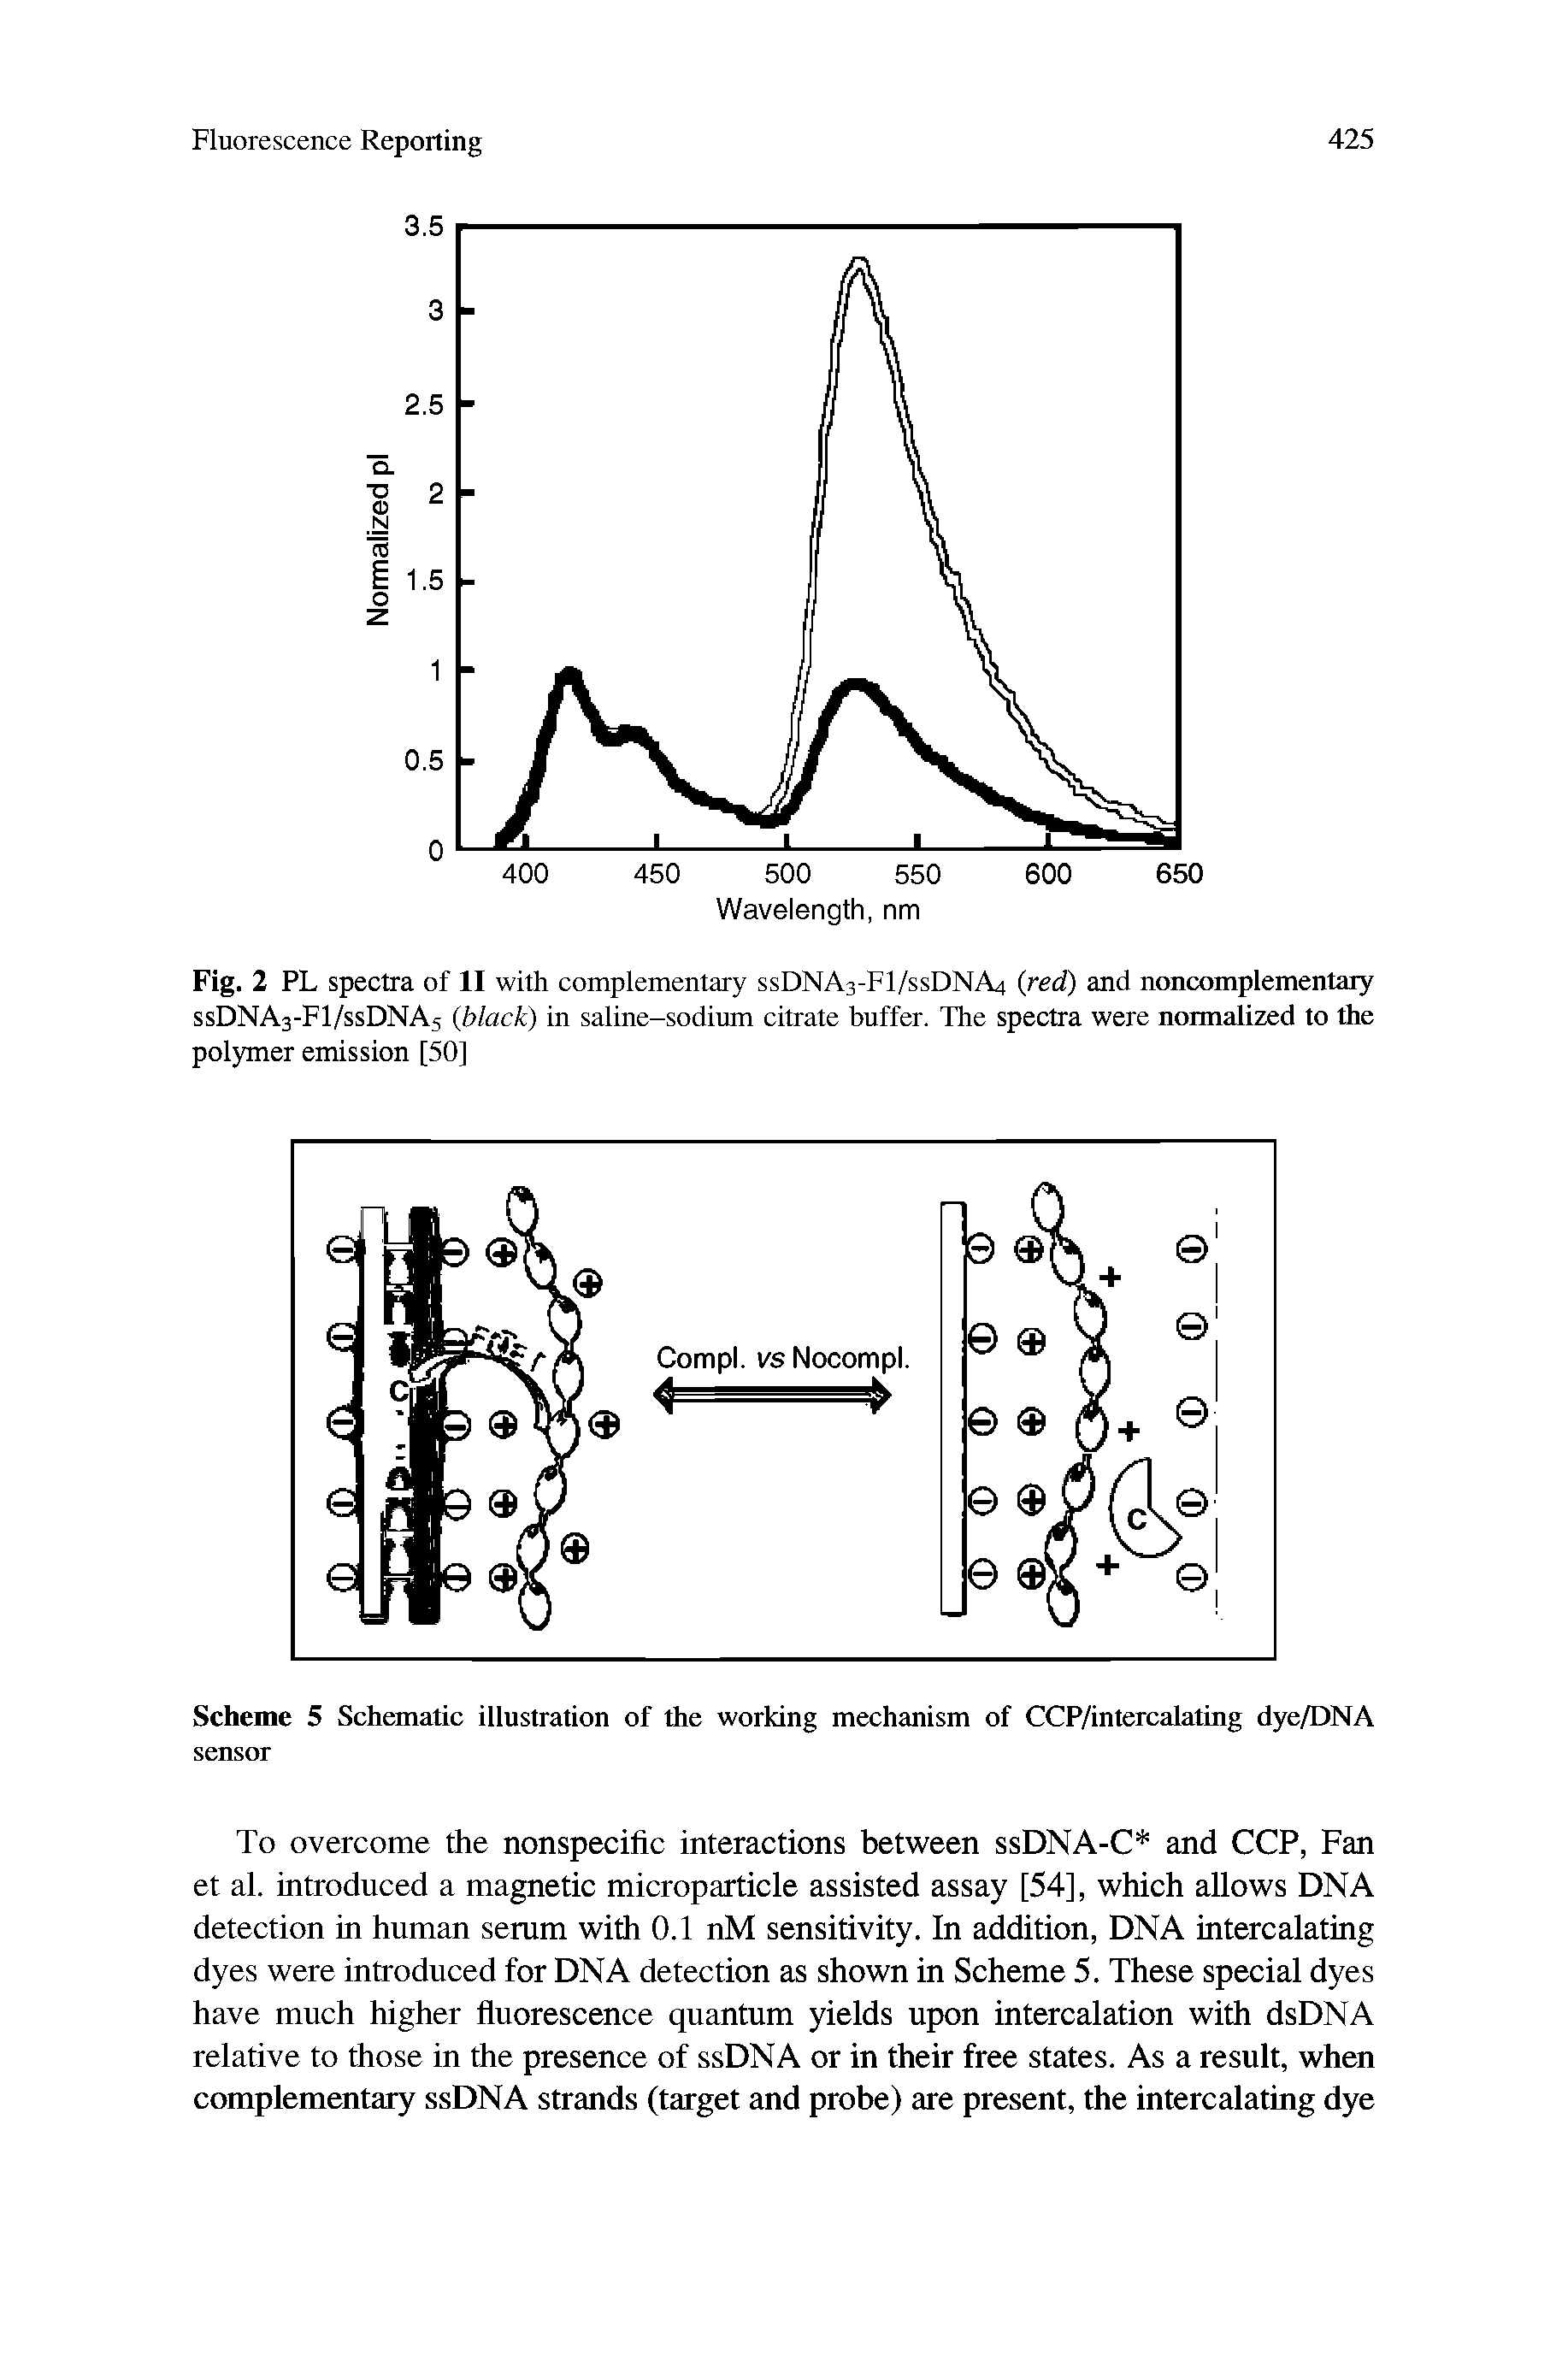 Scheme 5 Schematic illustration of the working mechanism of CCP/intercalating dye/DNA sensor...